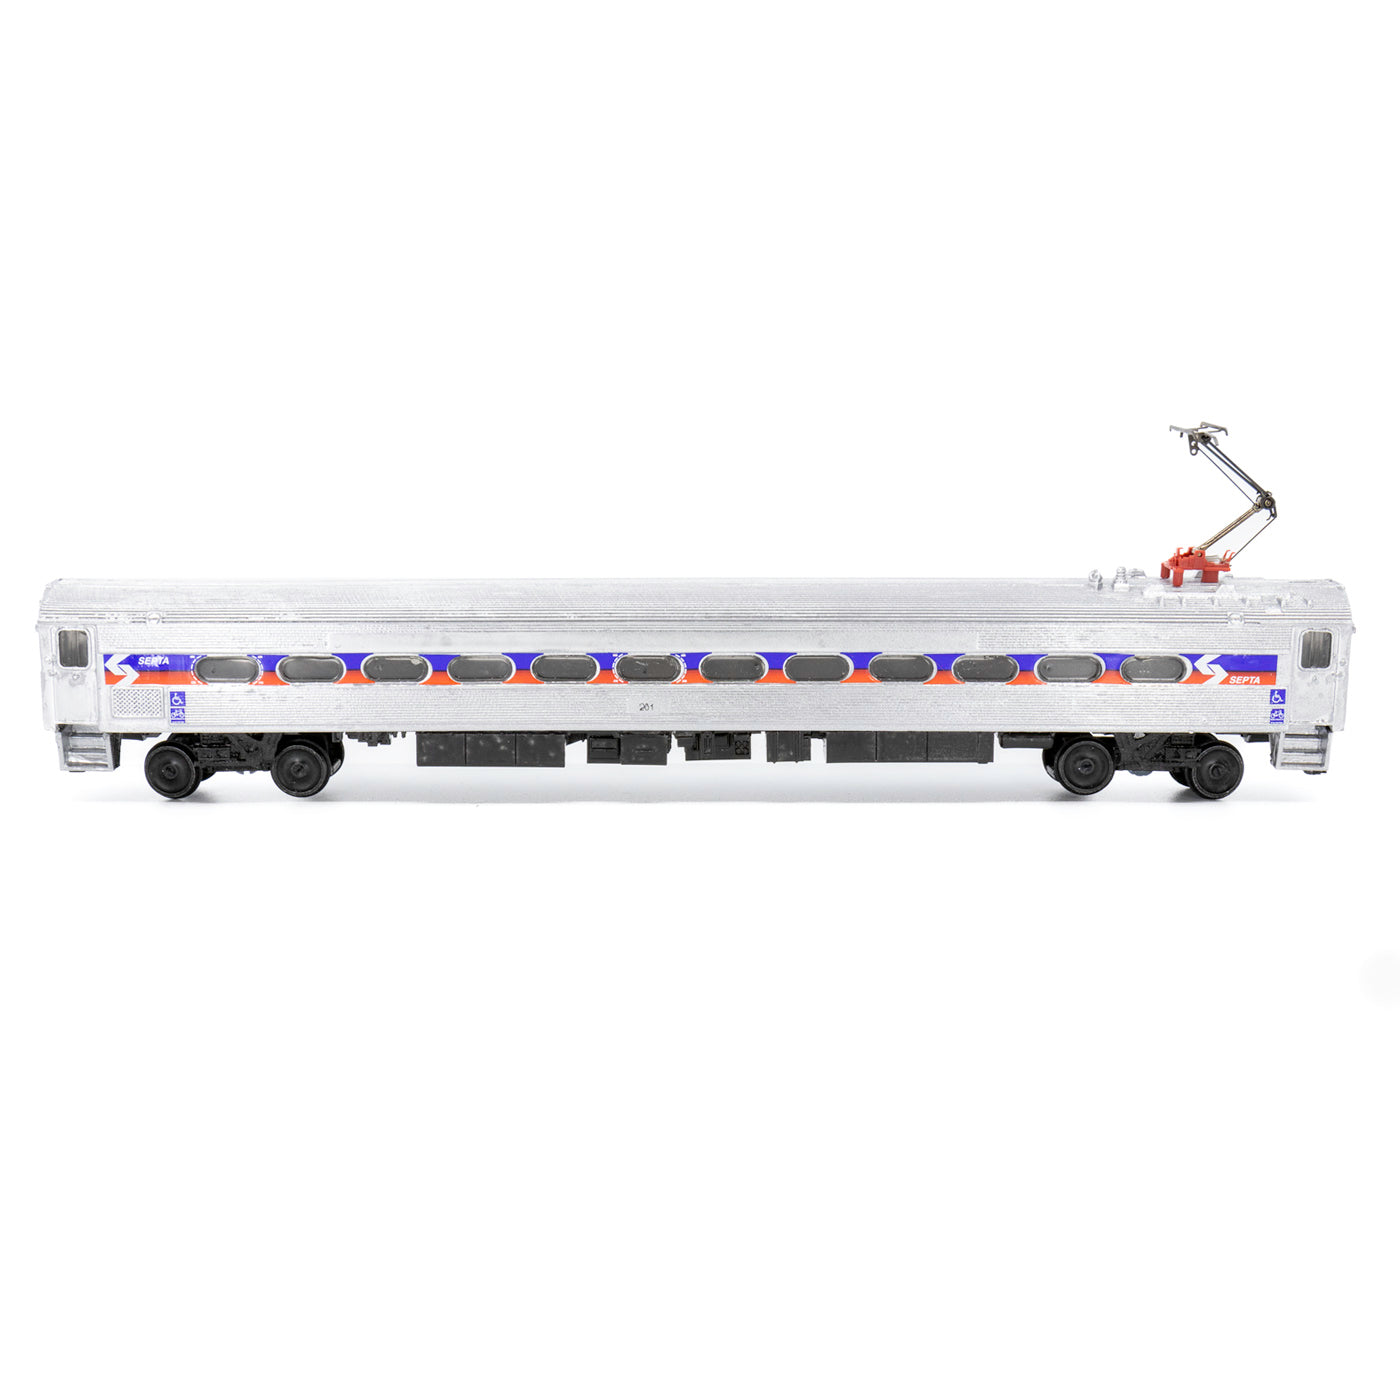 SEPTA Silverliner II - Handcrafted Display Model Train - SEPTA